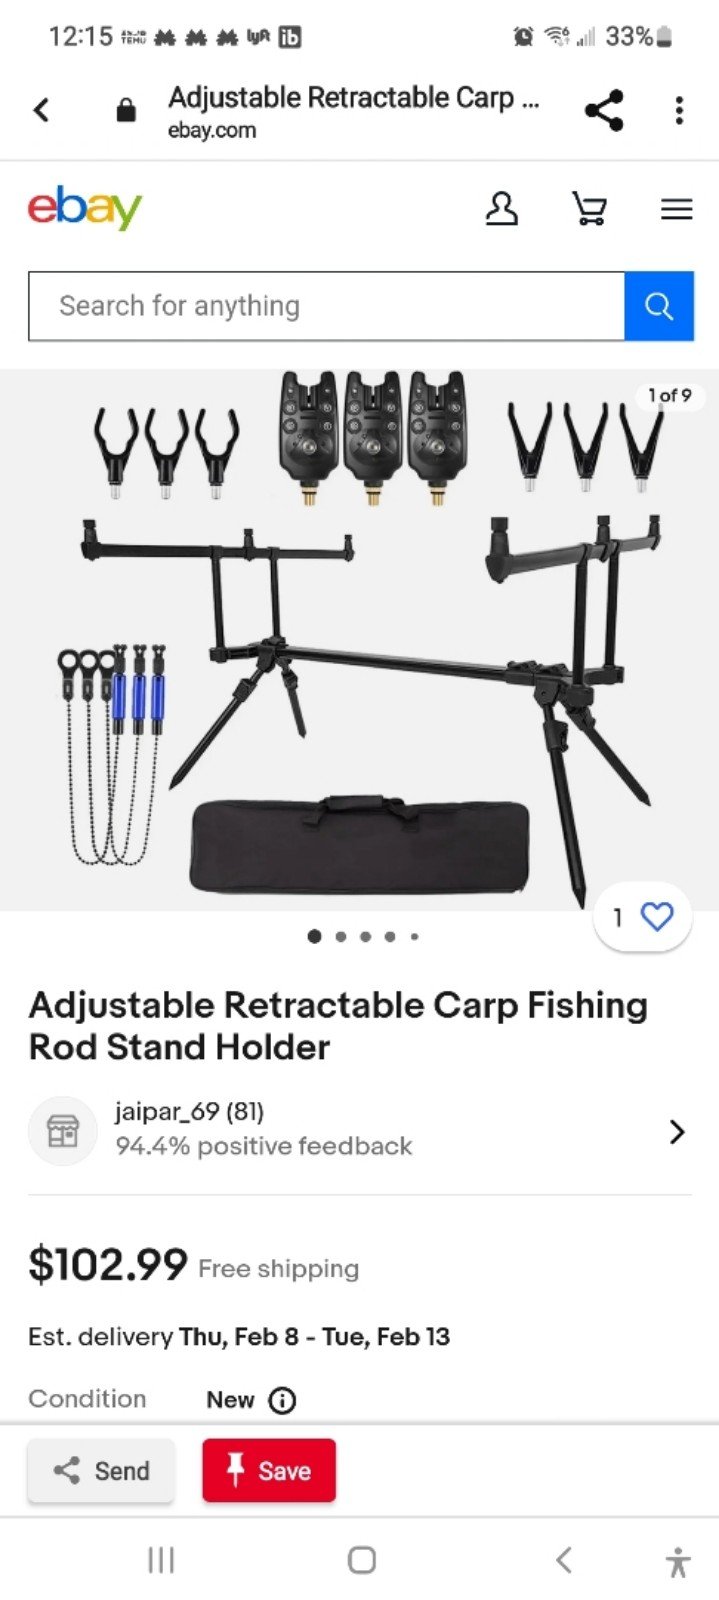 Concord Adjustable Carp Fishing Rod Stand Holder eHGUFZEIw